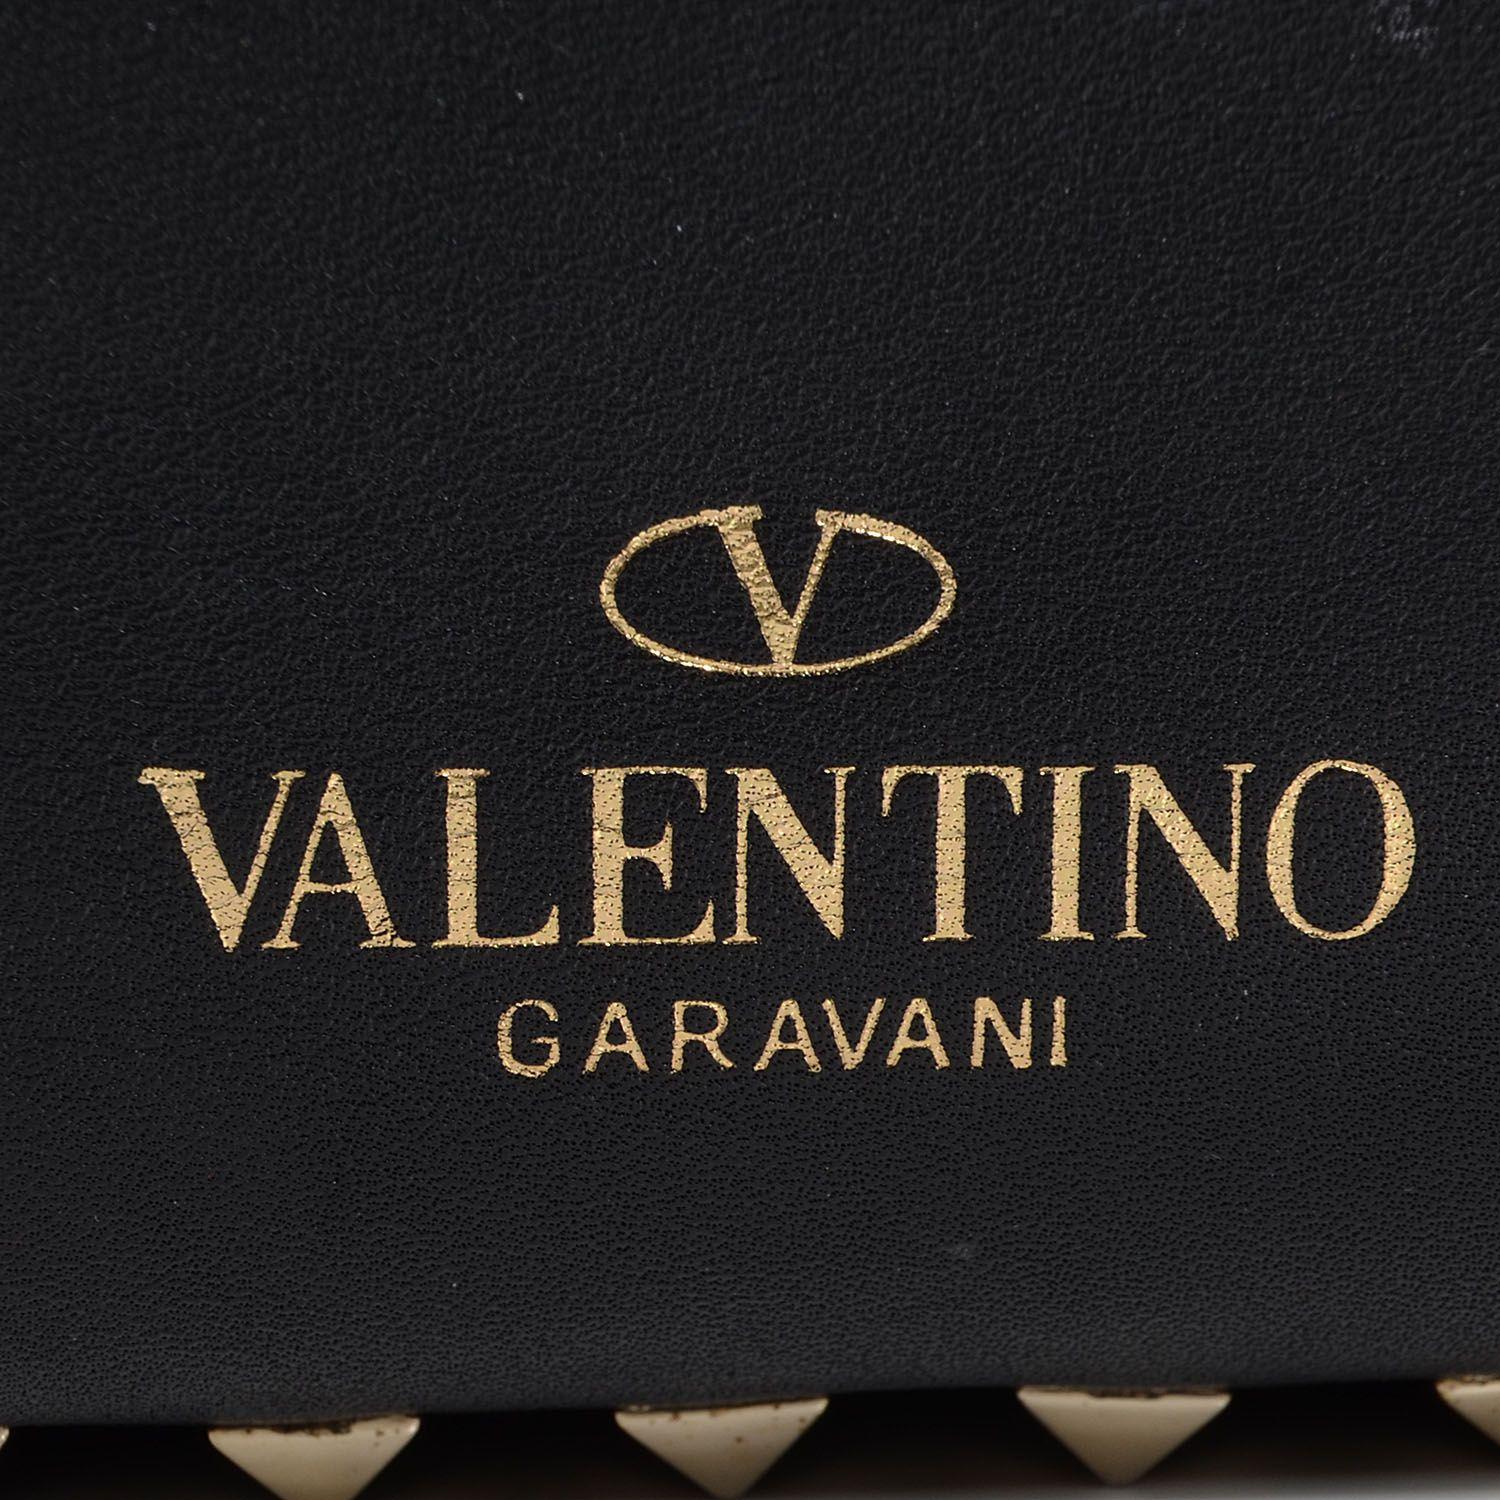 Valentino Garavani Logo - LogoDix